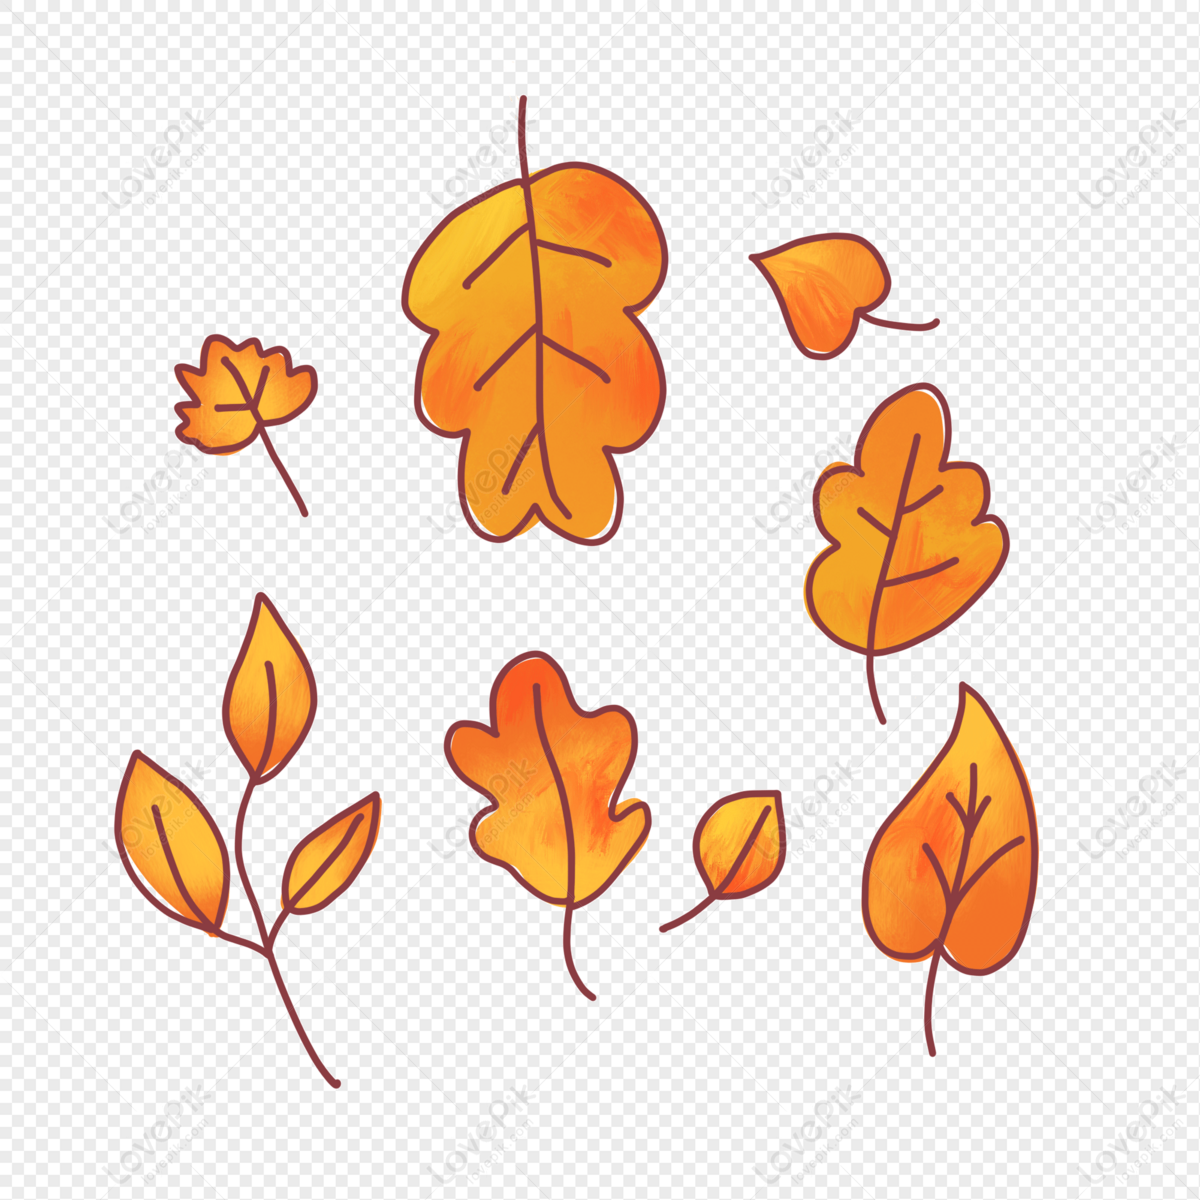 Autumn leaf vector illustration. Realistic hand... - Stock Illustration  [106394894] - PIXTA